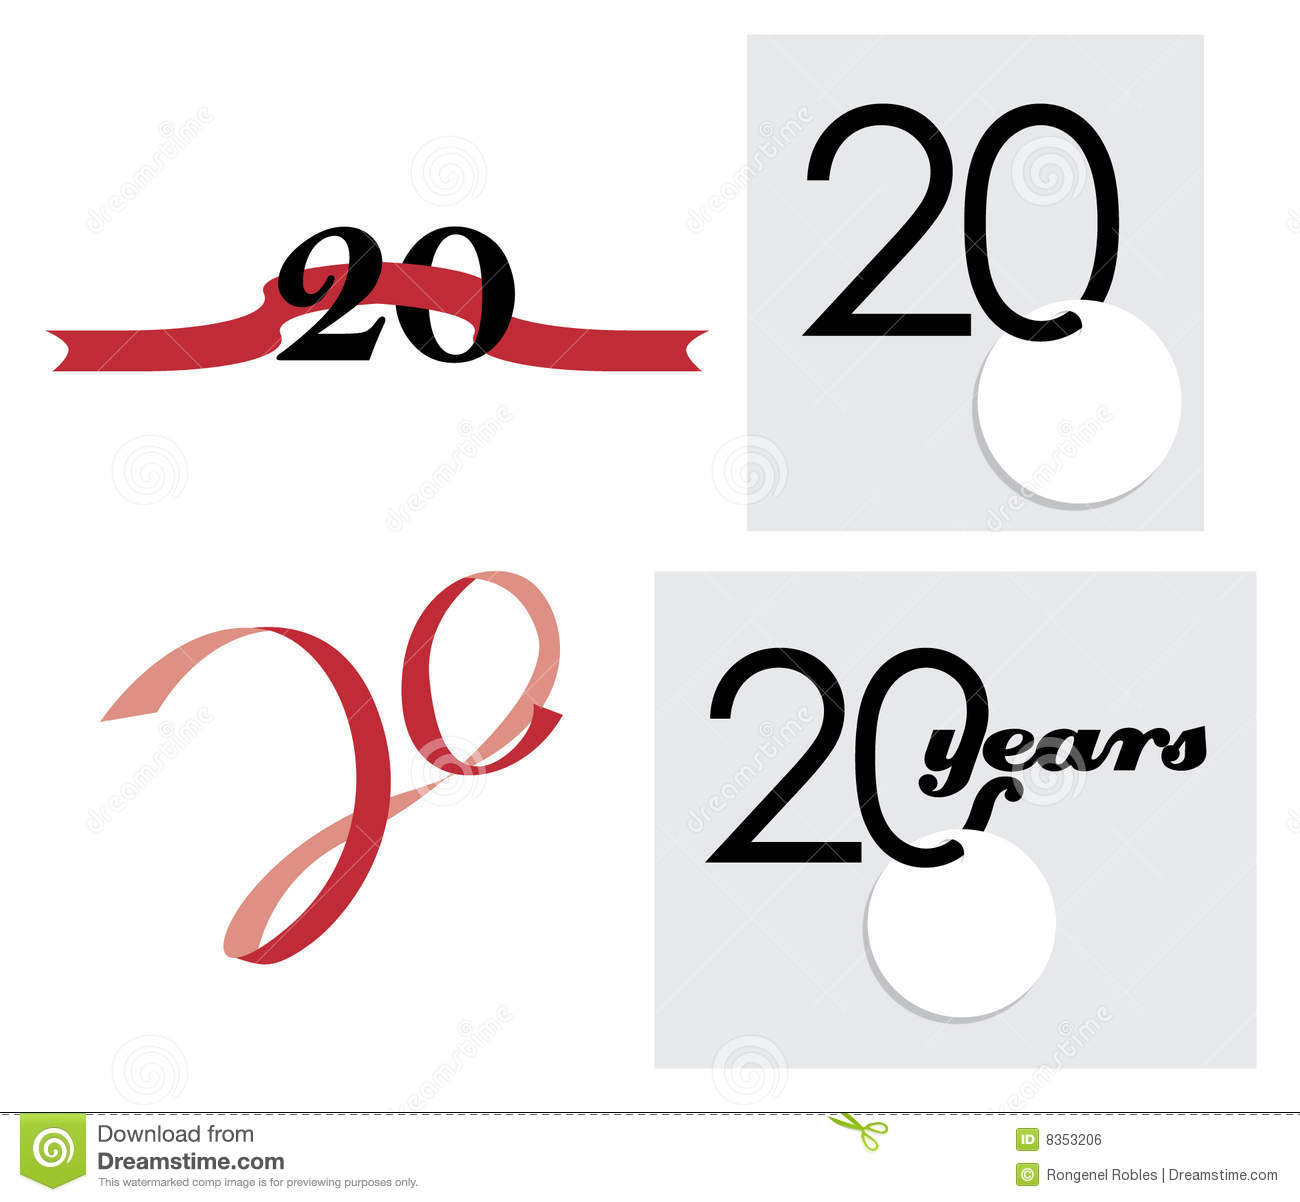 20th Anniversary Celebration Royalty Free Stock Image   Image  8353206